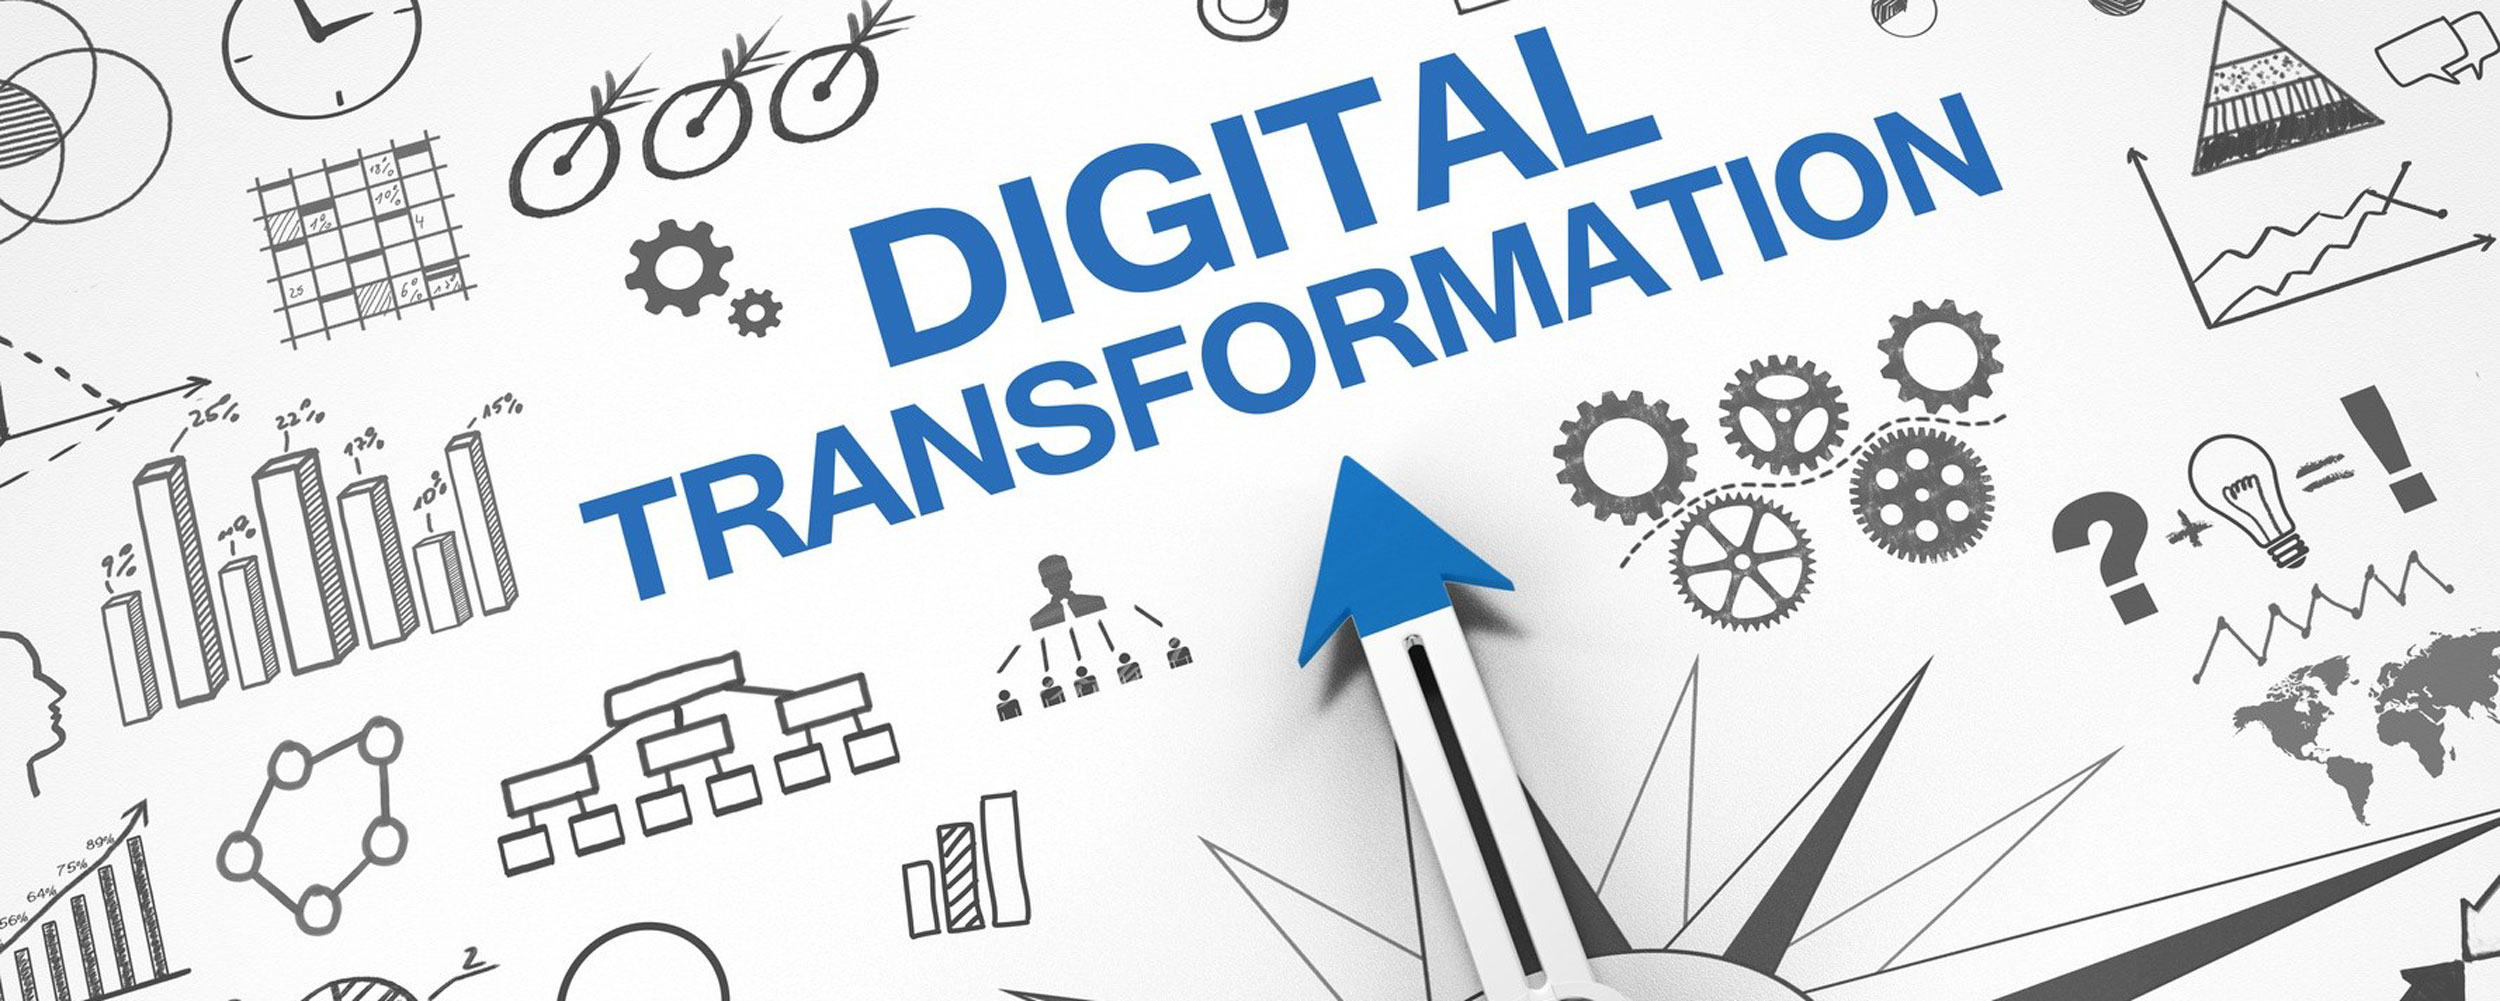 michel begat transformation digitale